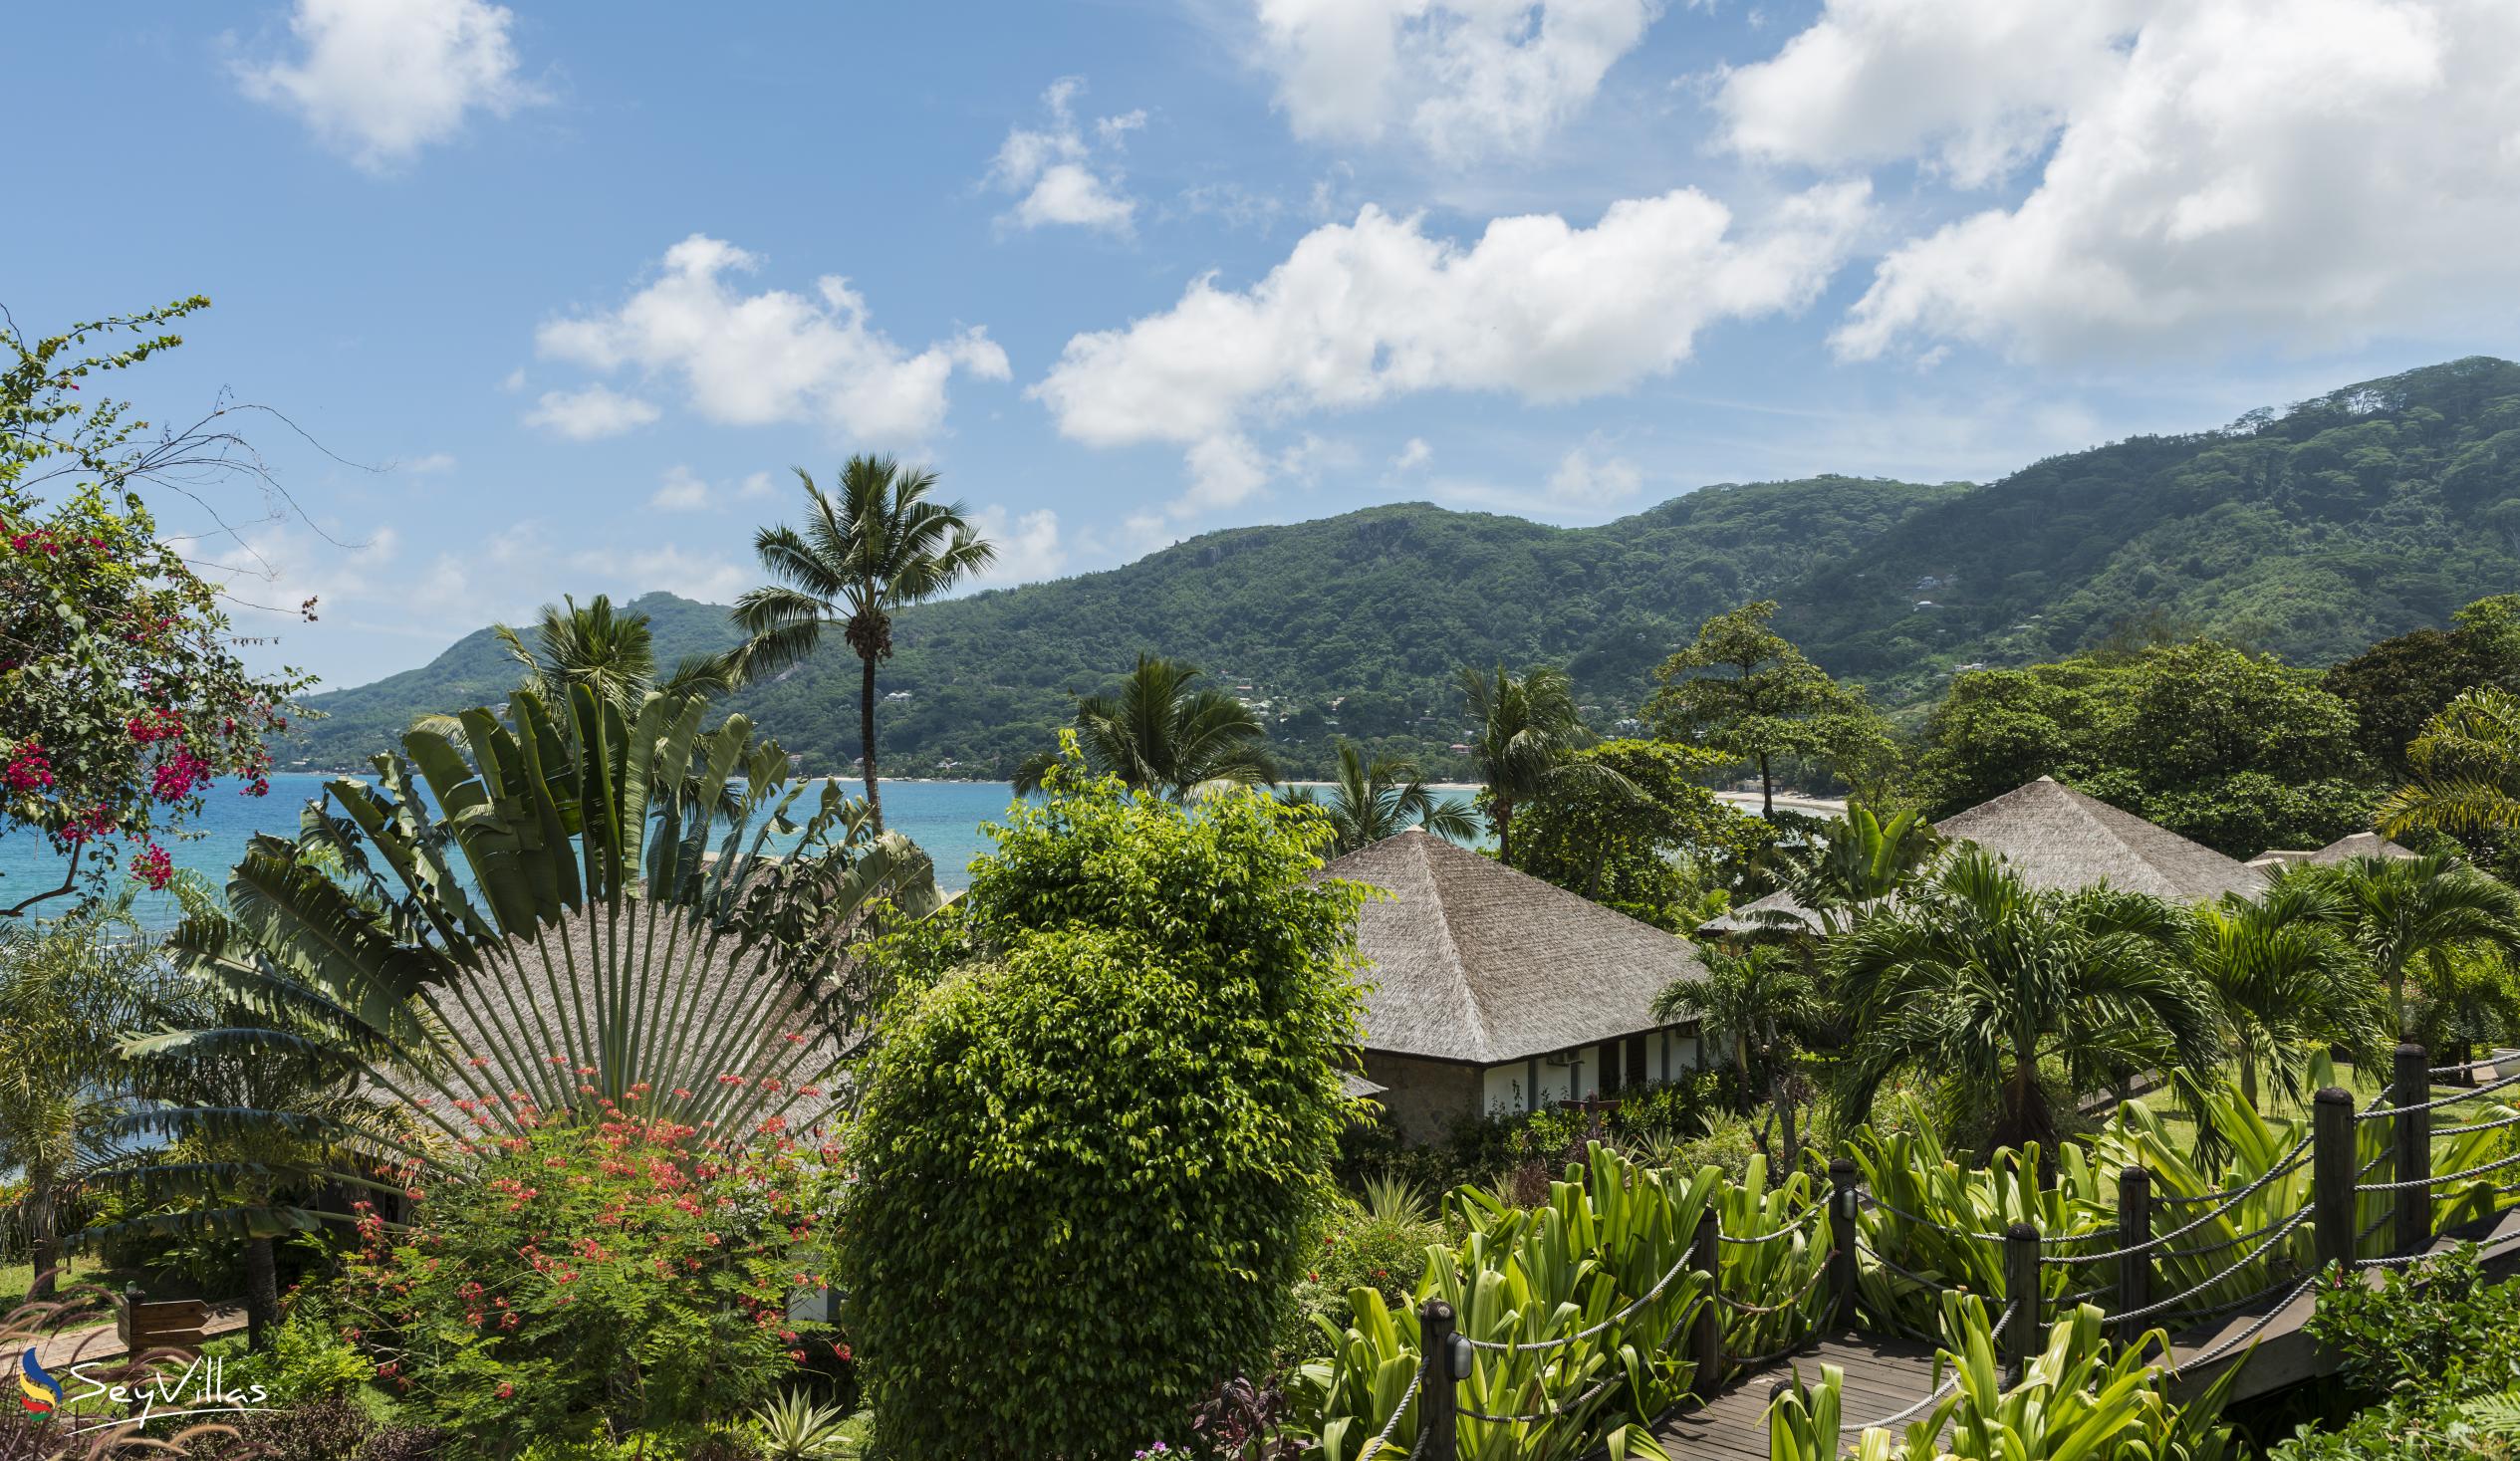 Photo 1: Fisherman's Cove Resort - Outdoor area - Mahé (Seychelles)